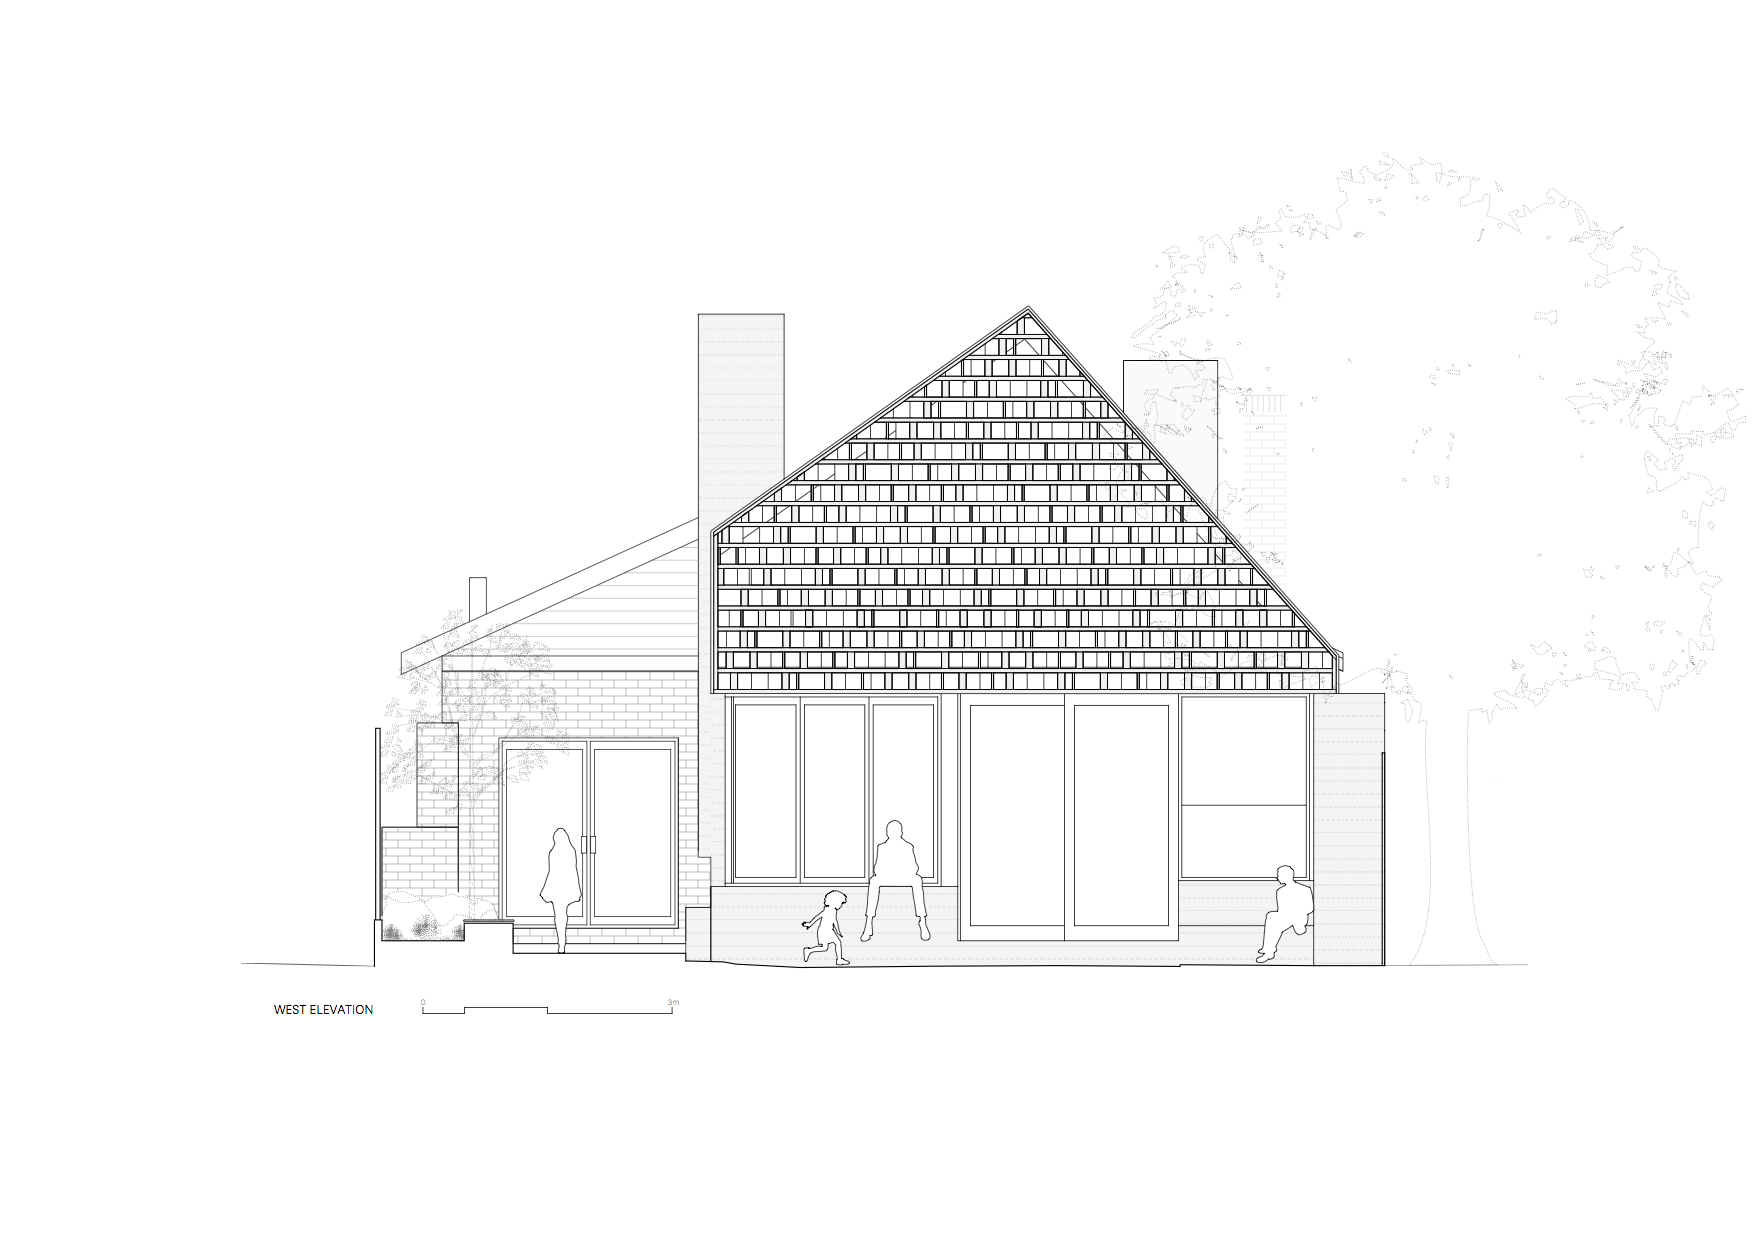 Local House / MAKE architecture (3)